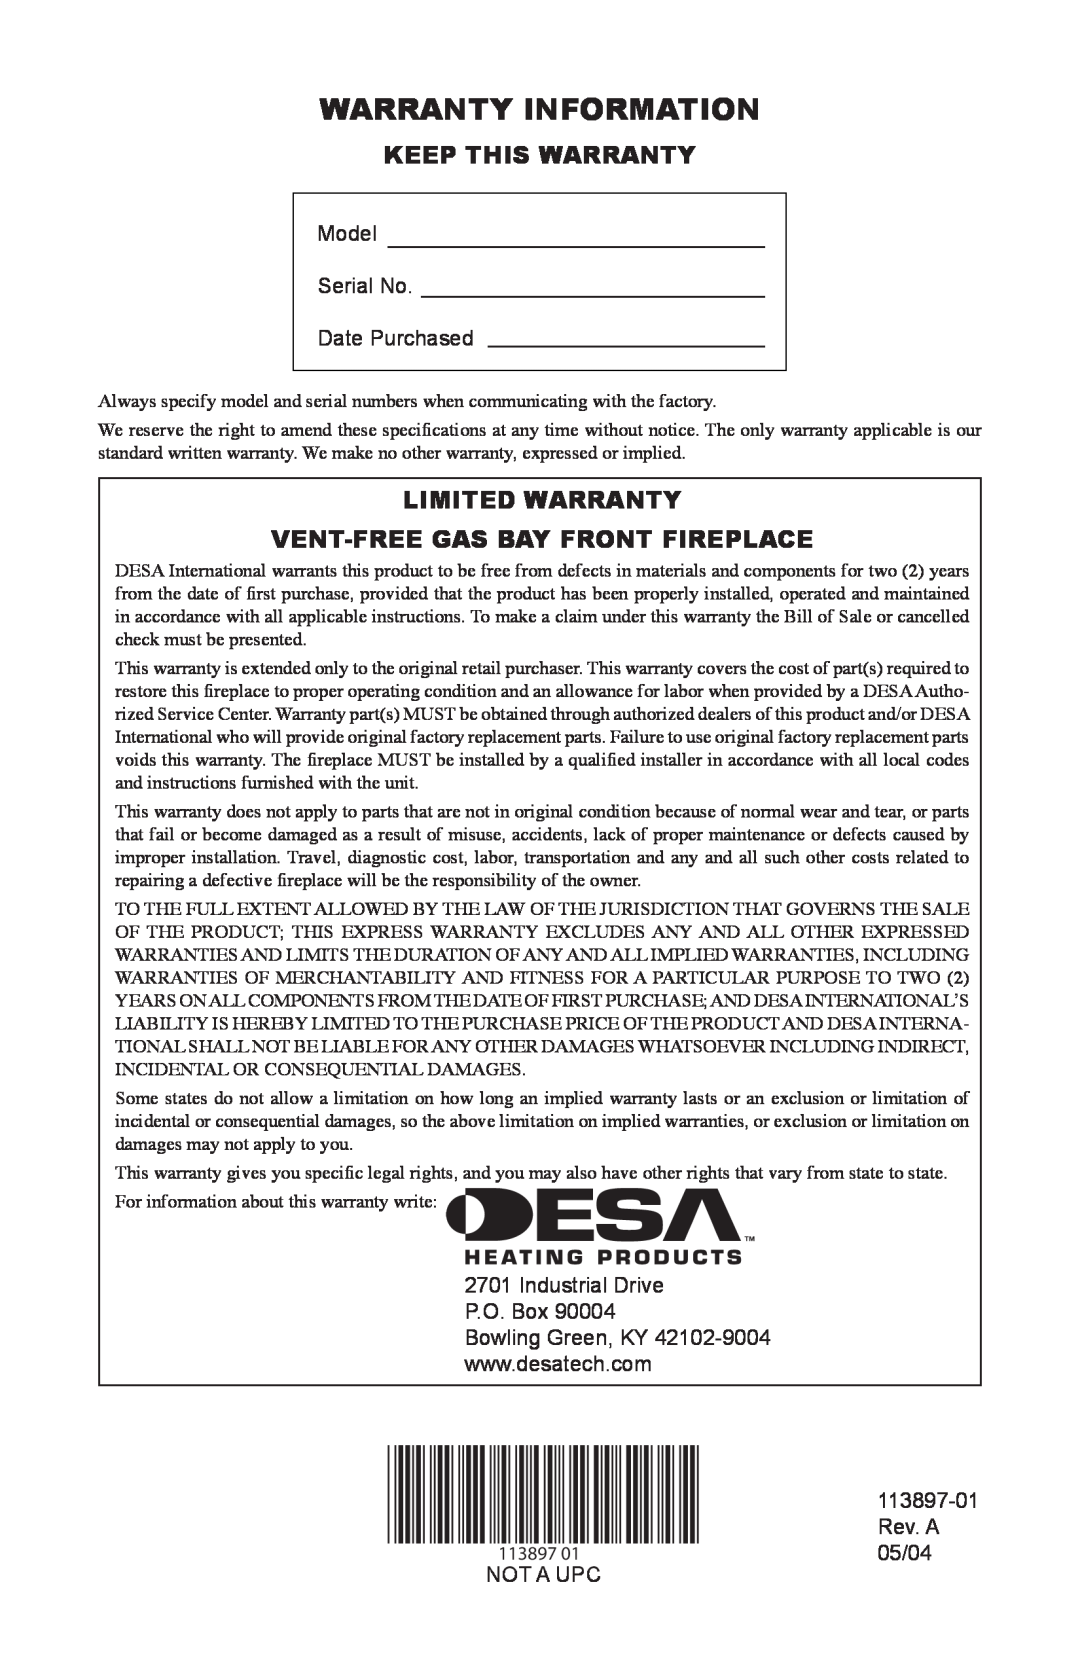 Desa CF26PRA, CF26NRA Warranty Information, Keep This Warranty, Limited Warranty Vent-Freegas Bay Front Fireplace 